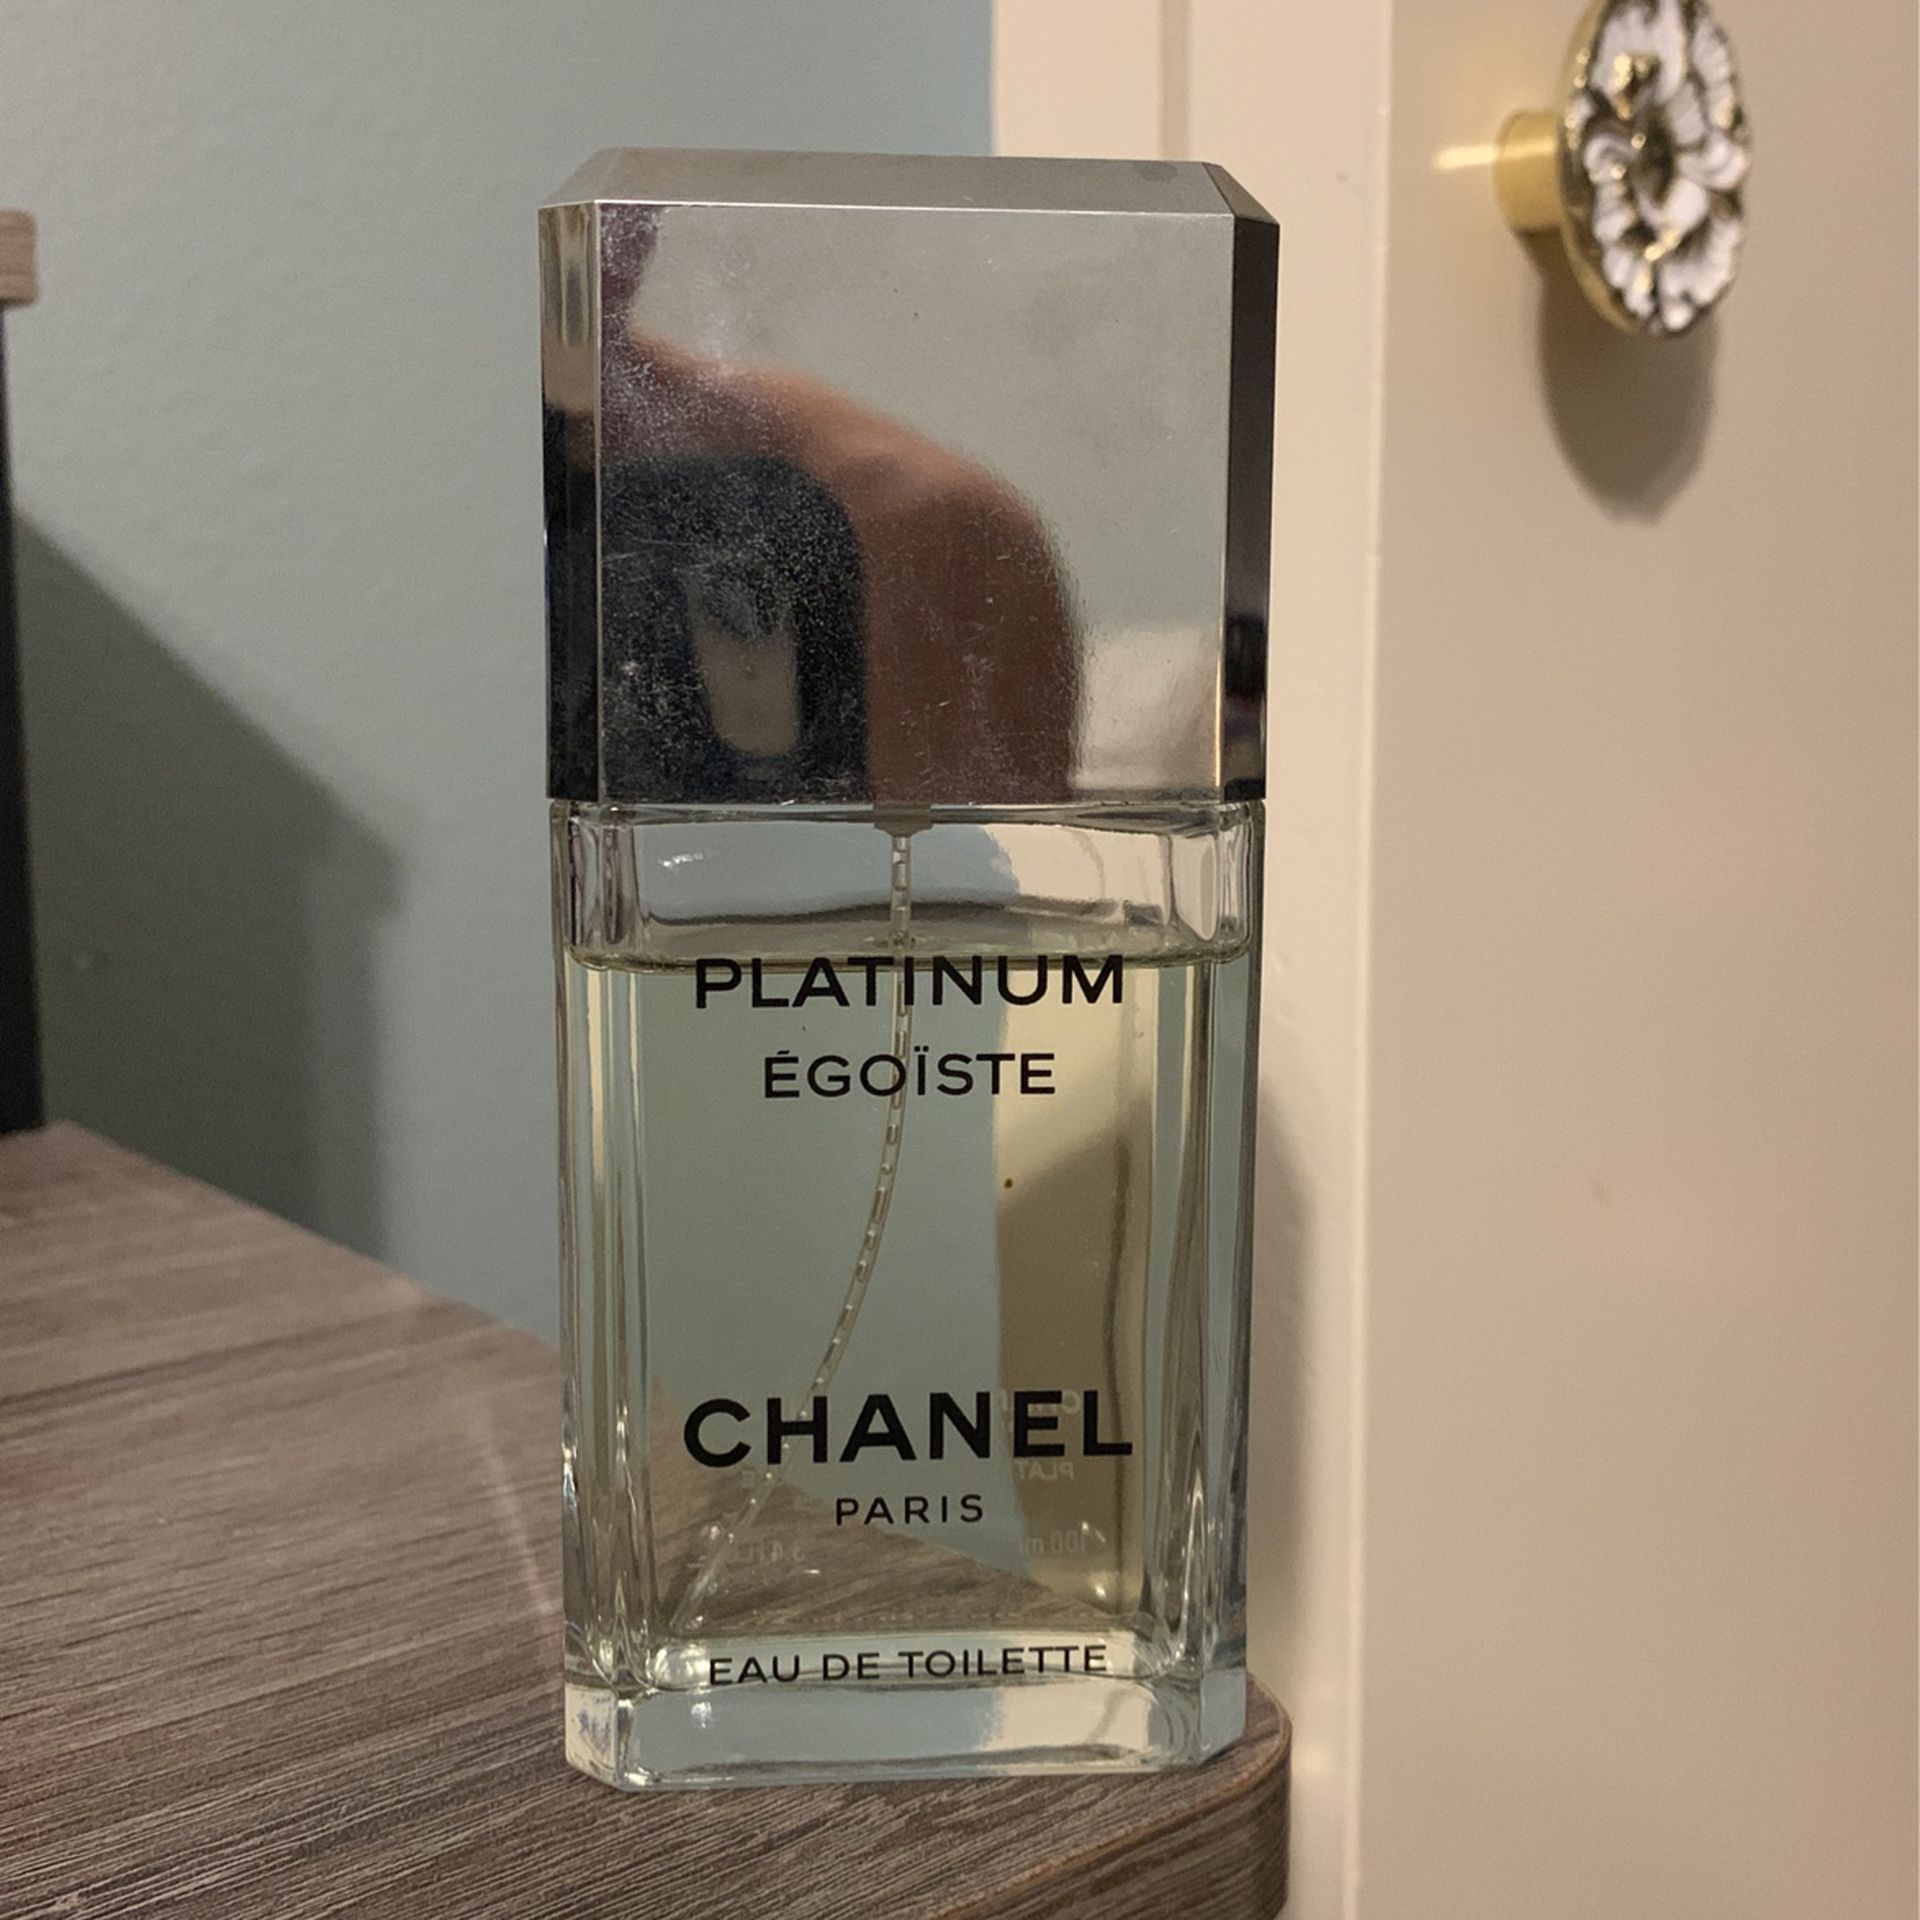 Platinum Egoiste Chanel Cologne for Sale in Santa Maria, CA - OfferUp